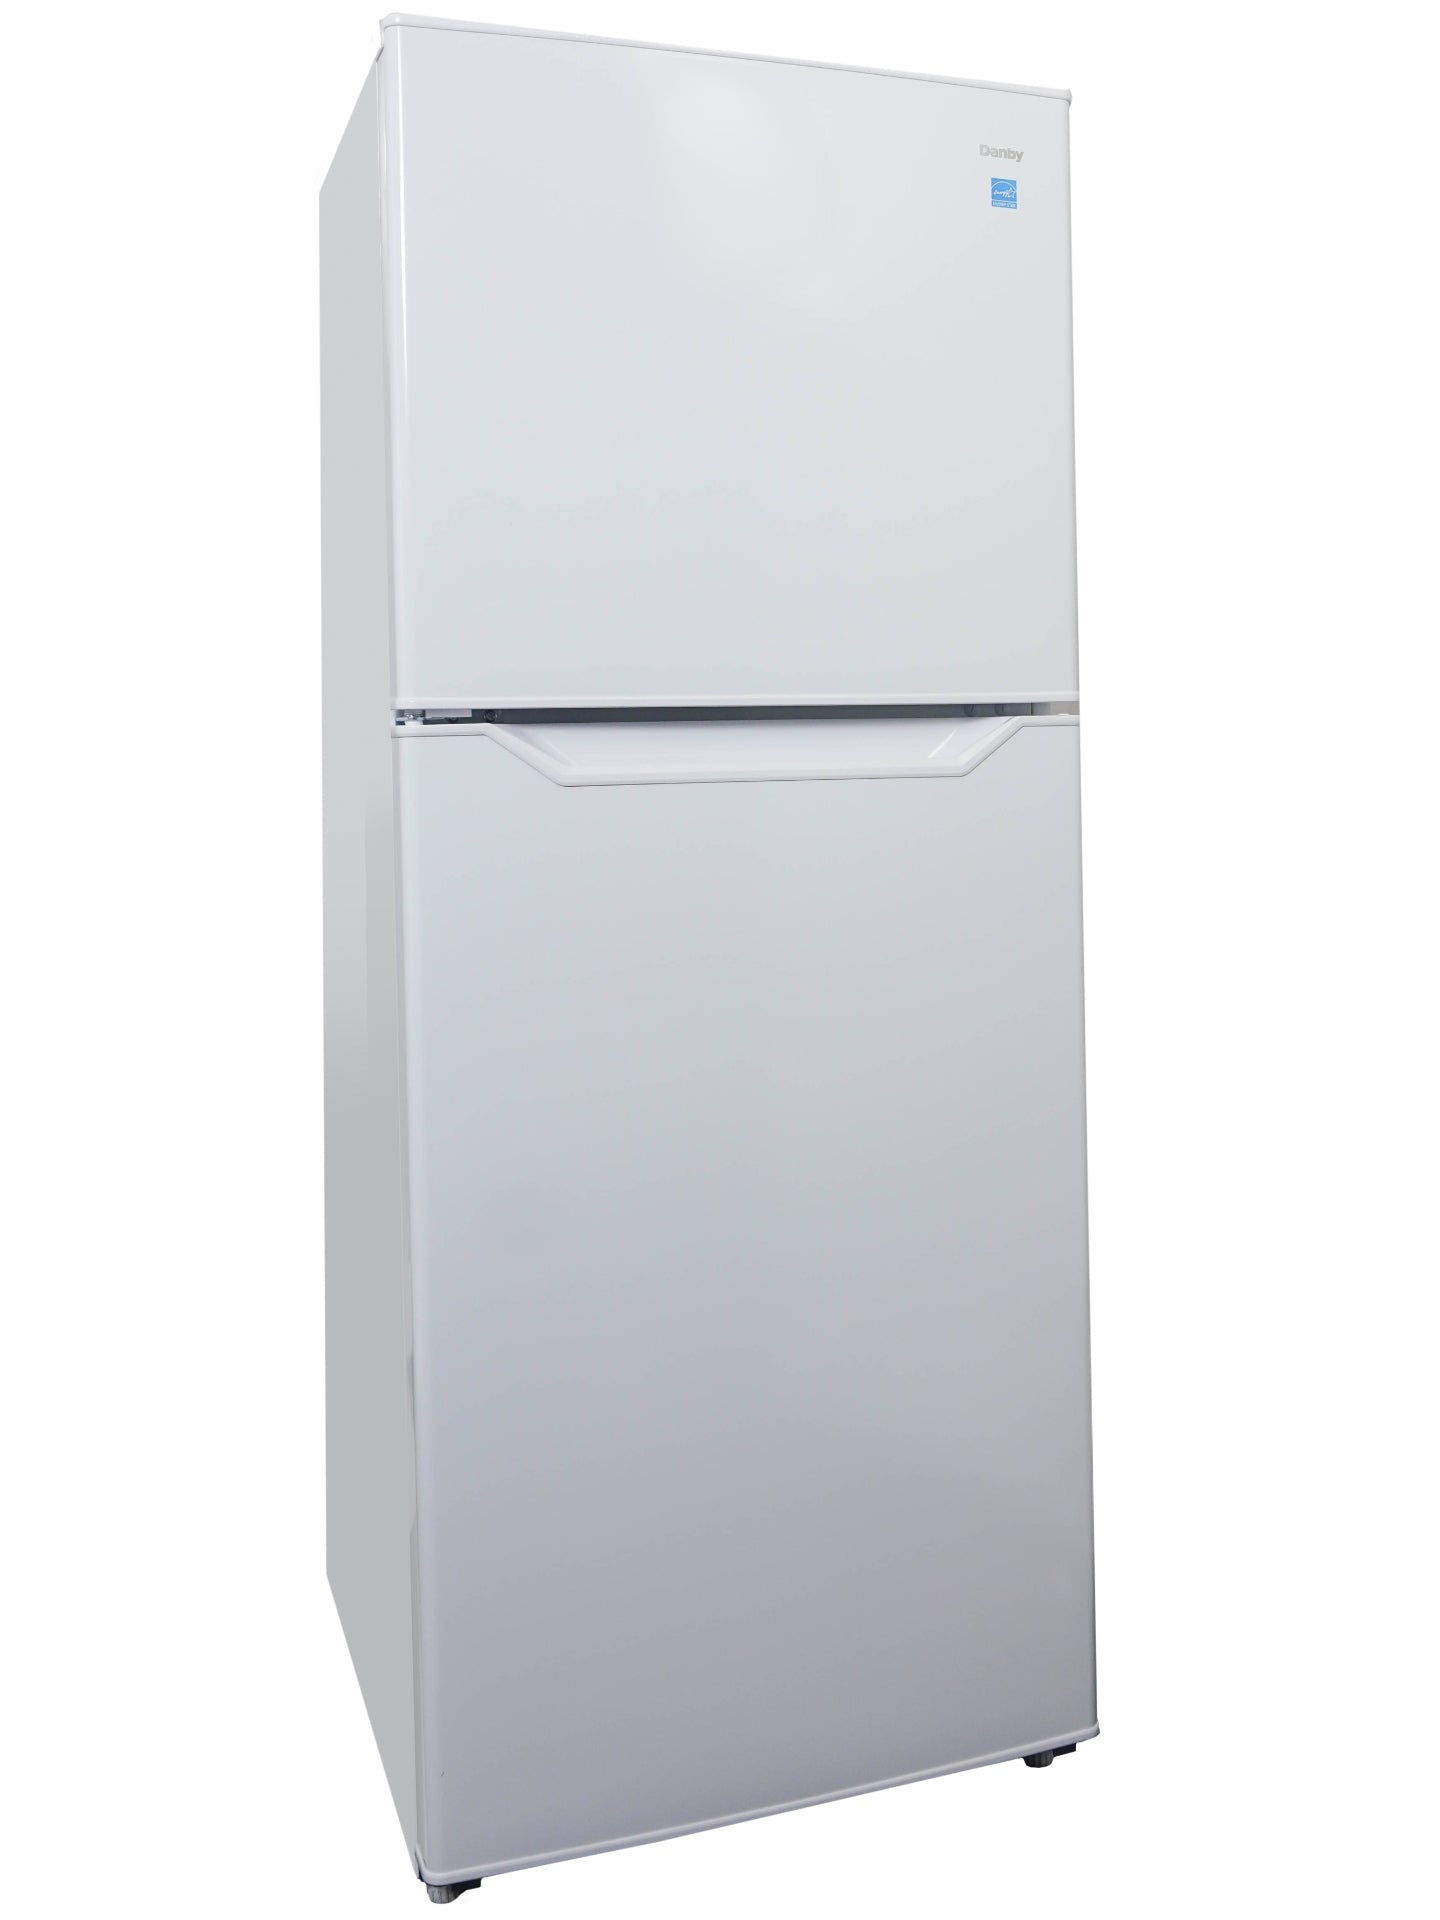 Danby - 23.44 Inch 11.6 cu. ft Top Mount Refrigerator in White - DFF116B2WDBR